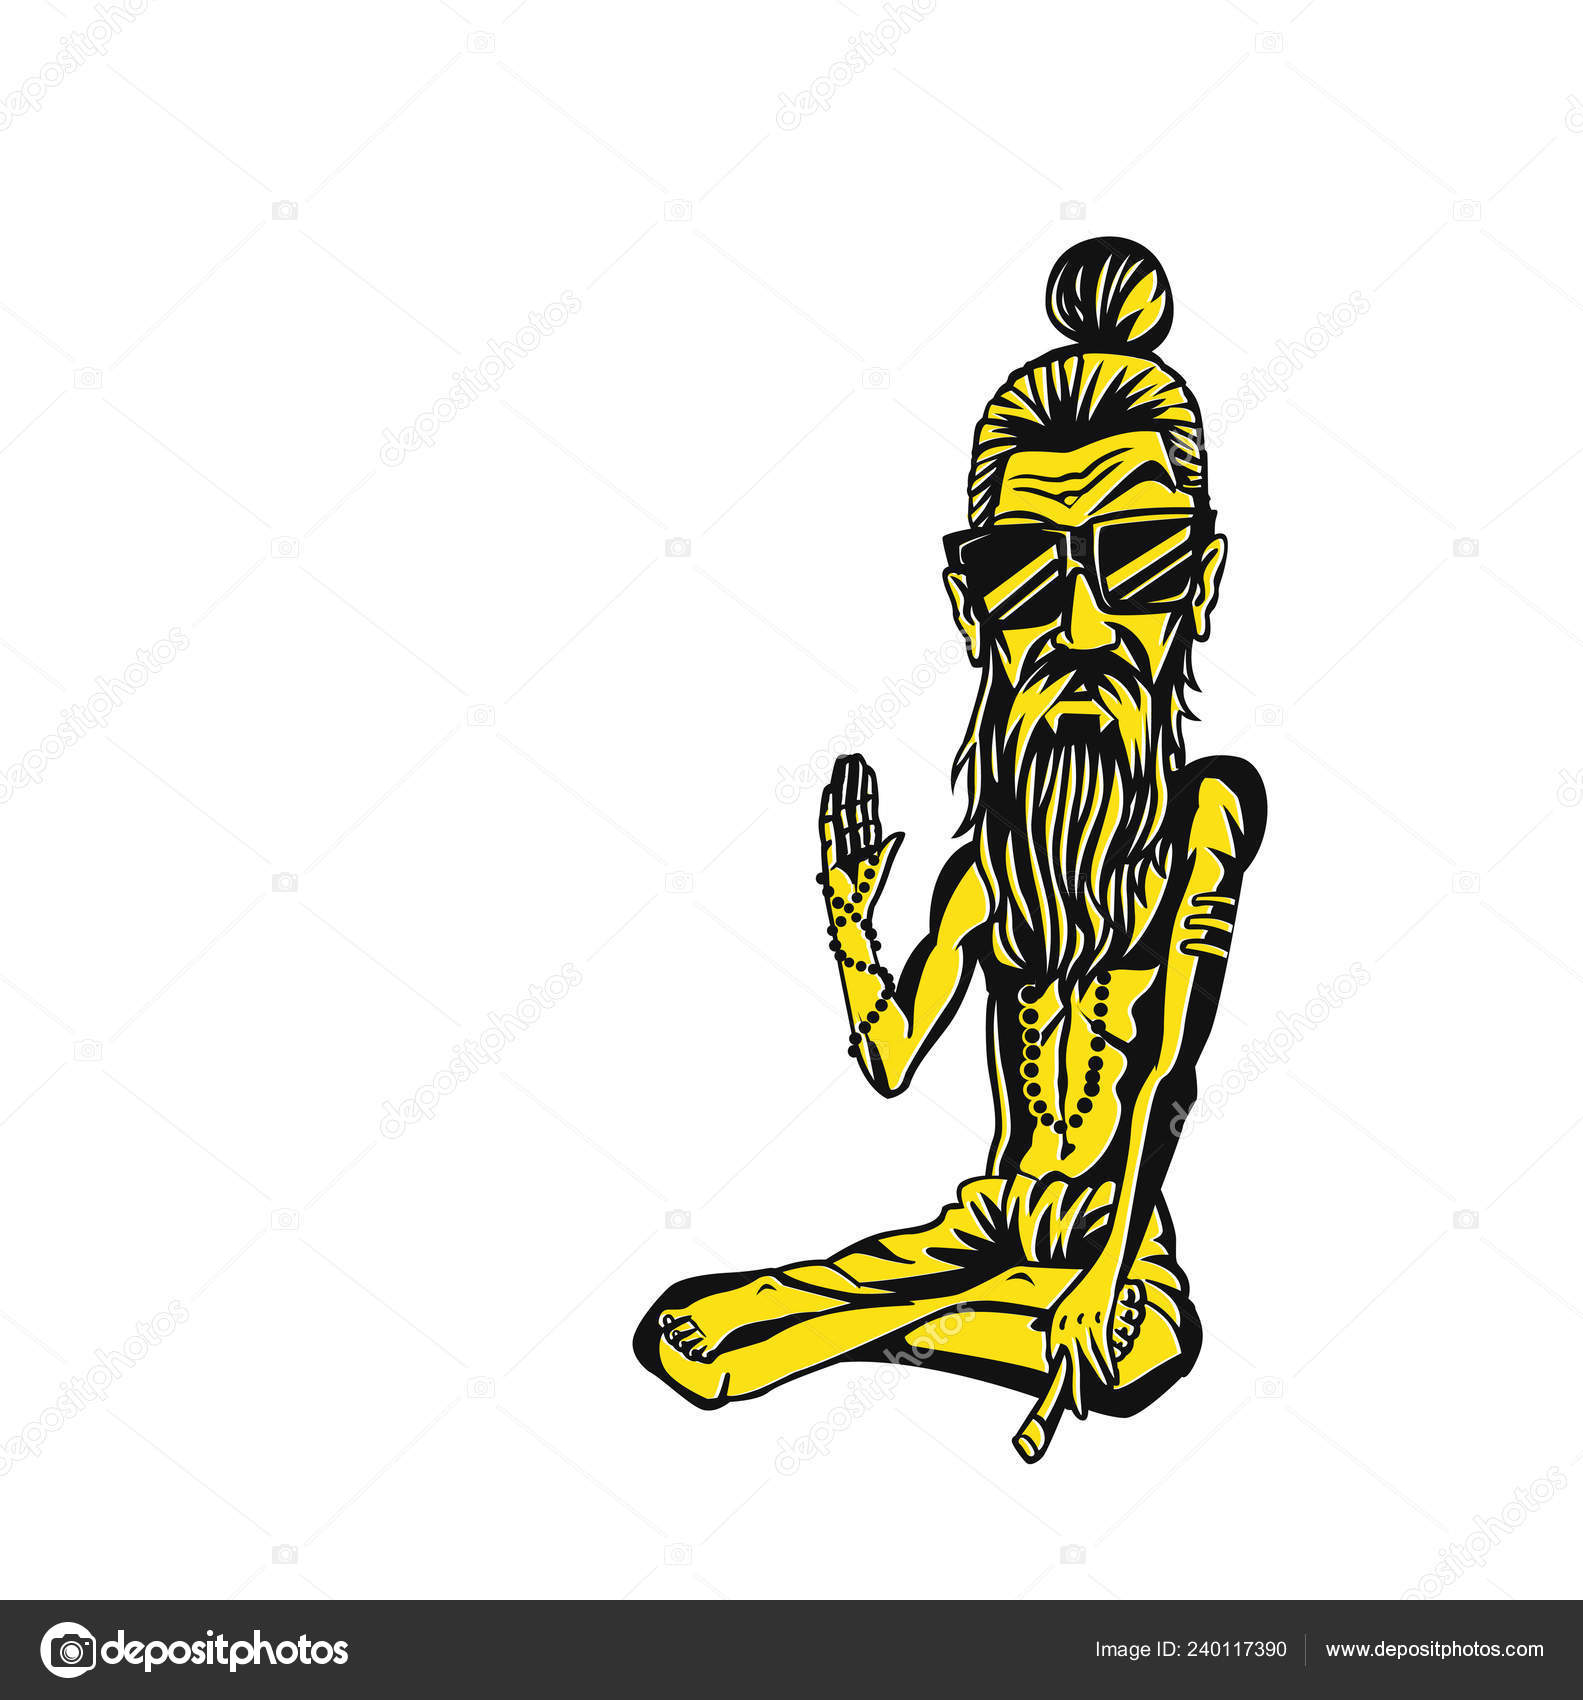 Hand drawn guru purnima Royalty Free Vector Image